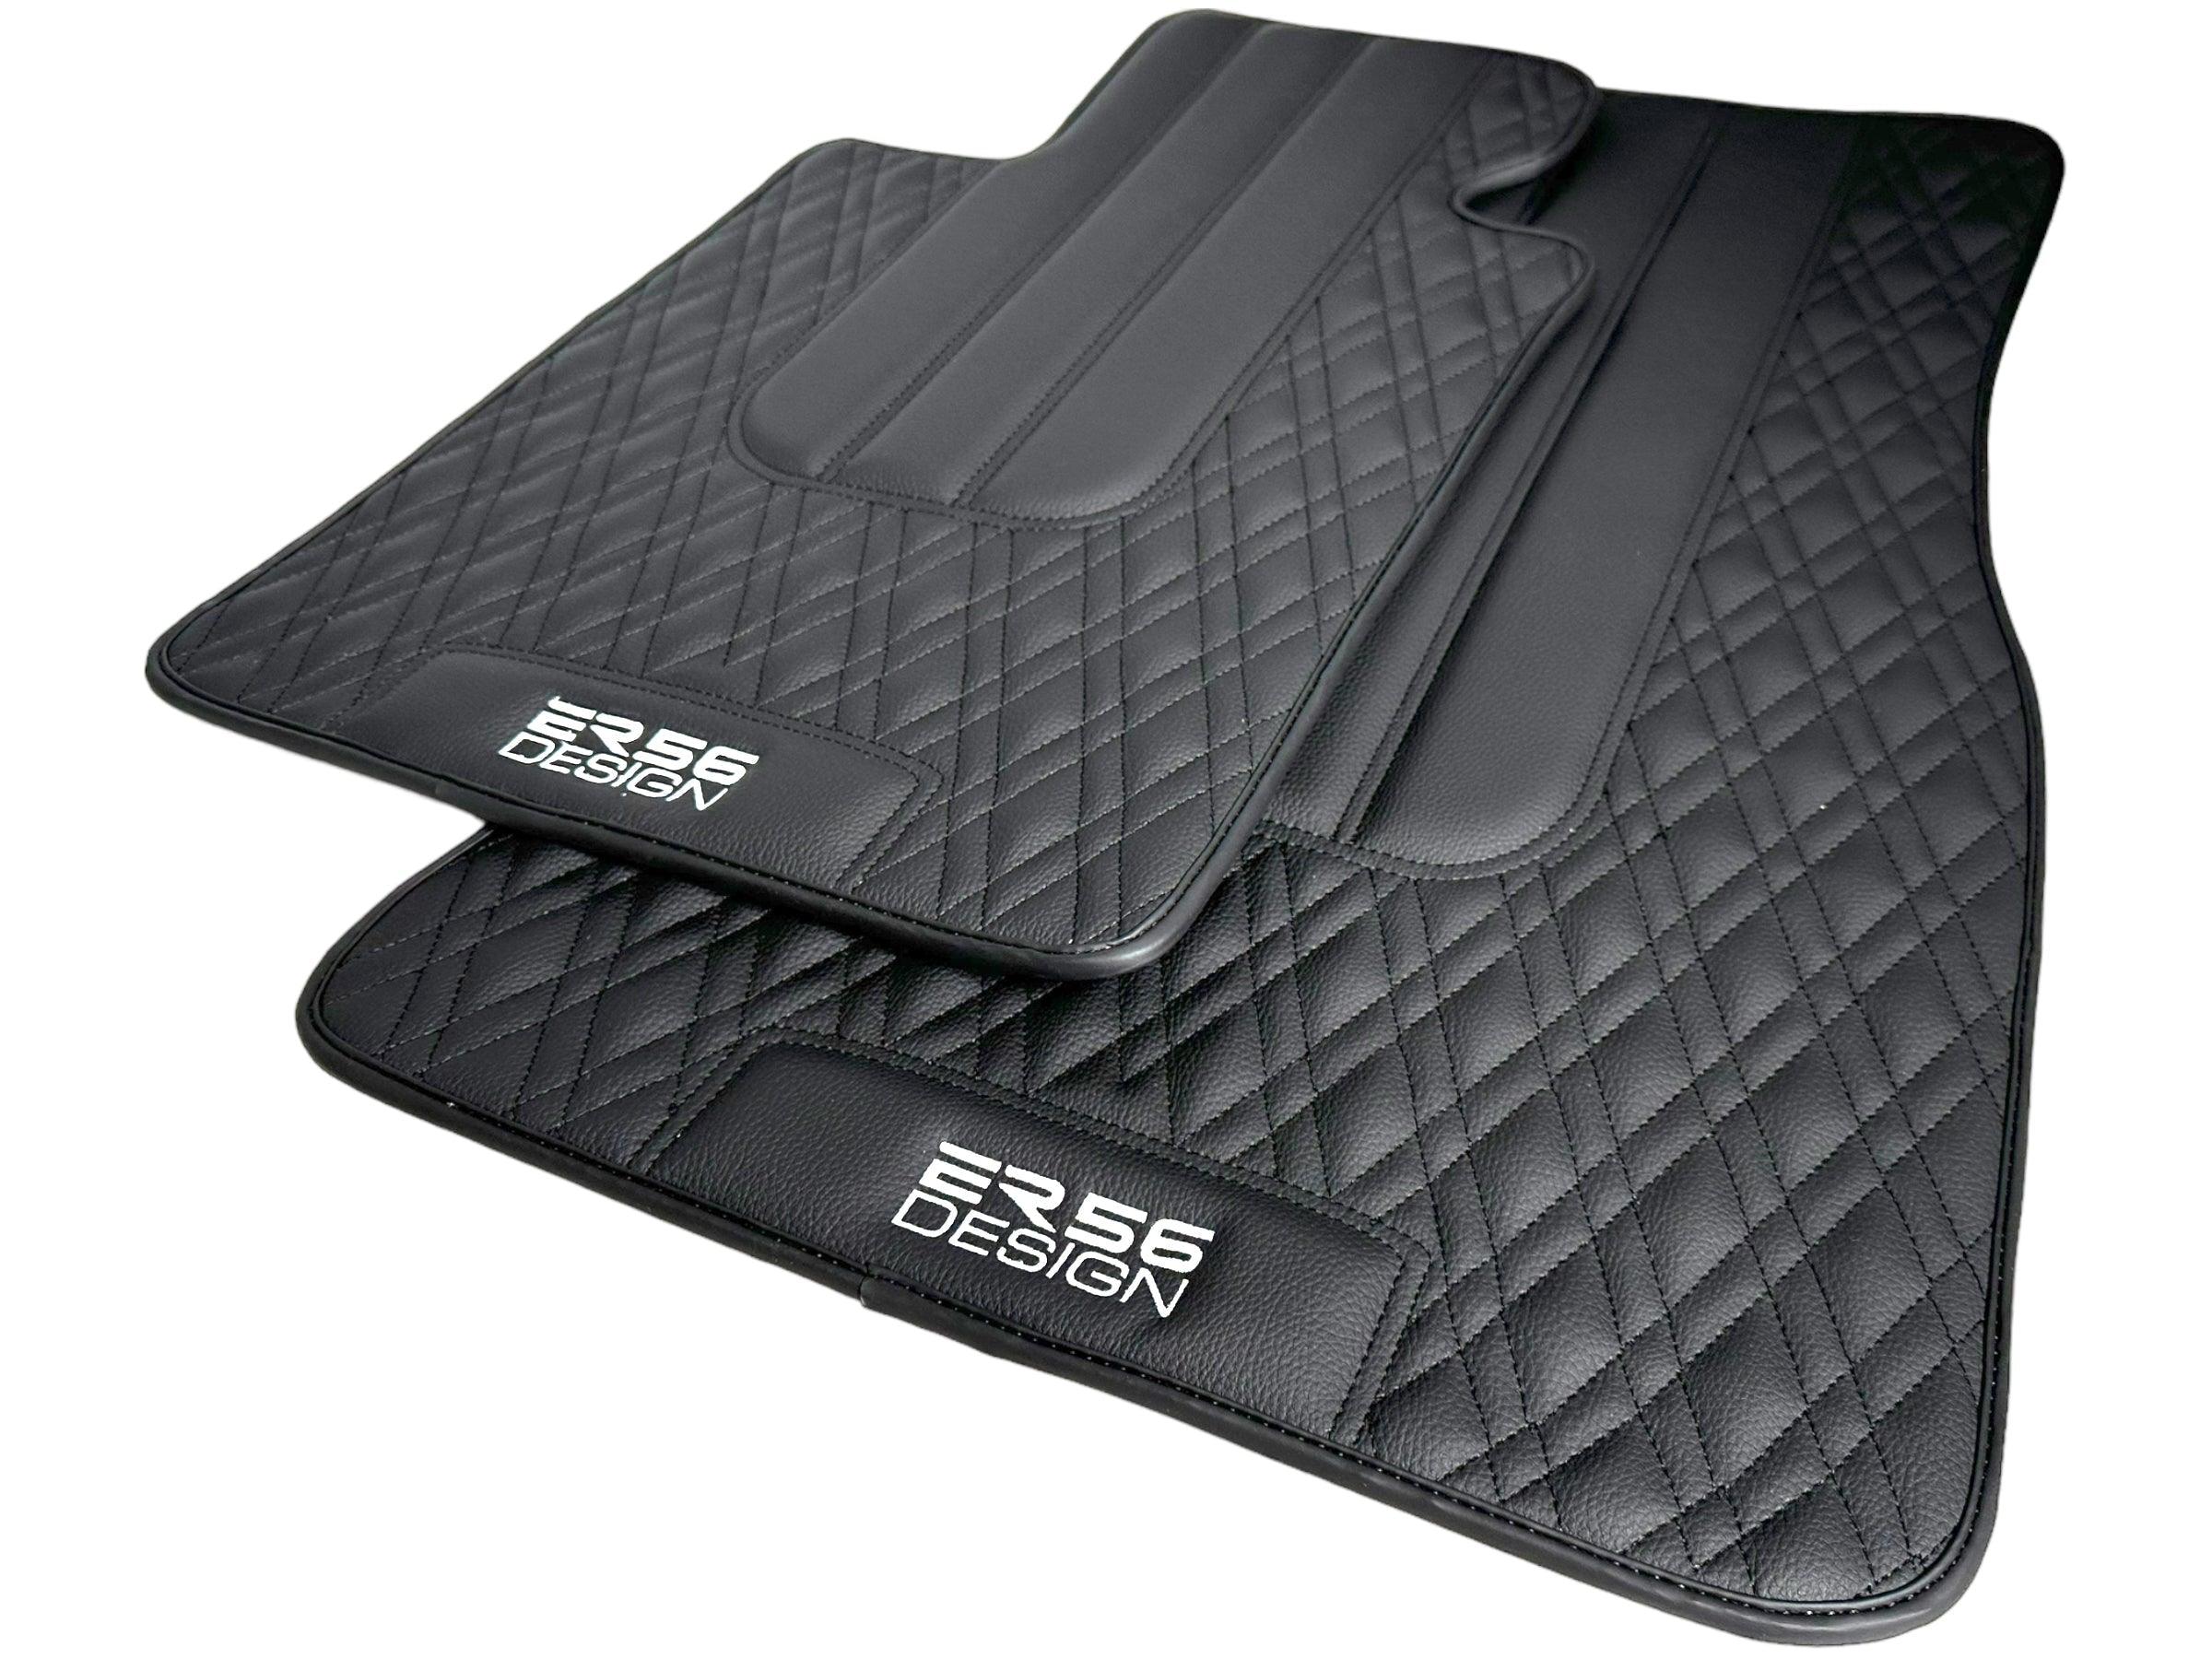 Floor Mats For BMW 5 Series E39 Black Leather Er56 Design - AutoWin